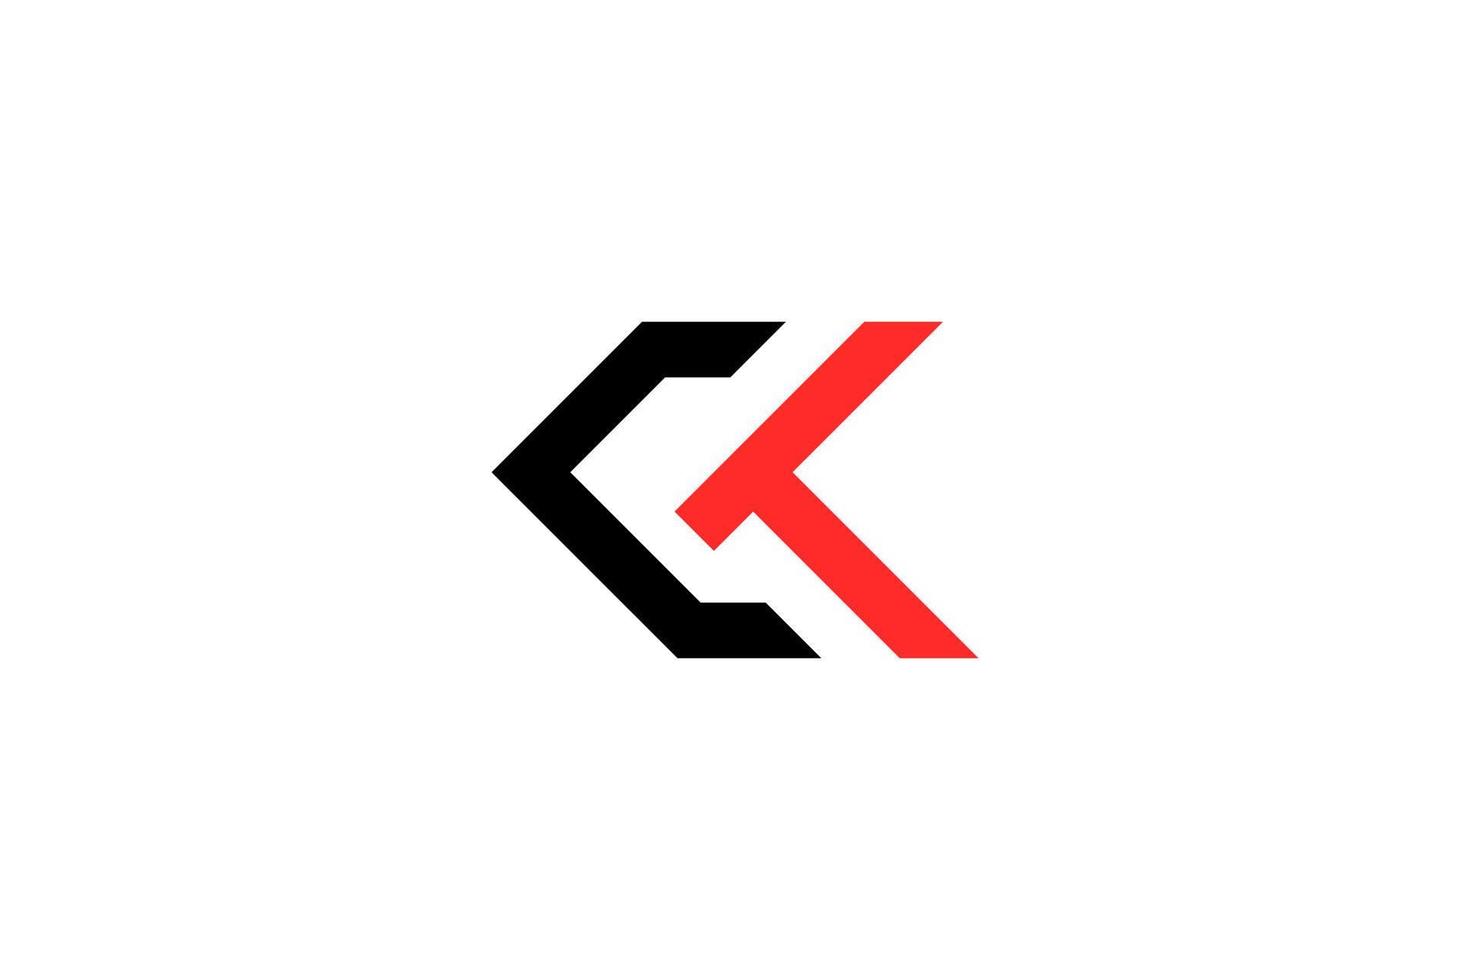 initial ck ck logotyp design vektor mall